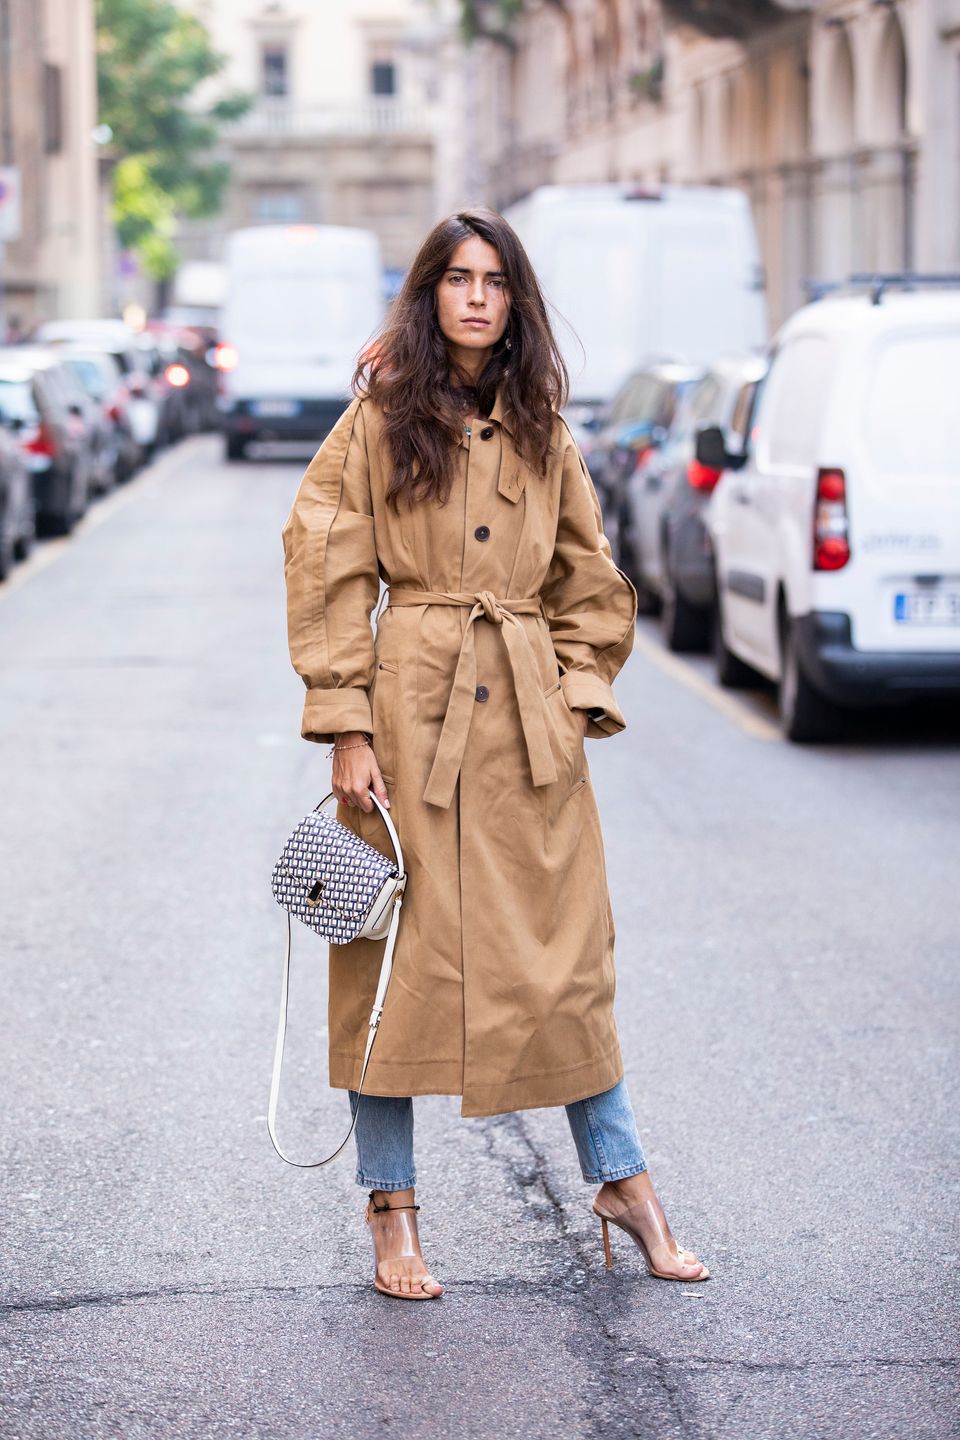 31 Italian Street Style Photos To Inspire Your Wardrobe HuffPost Life